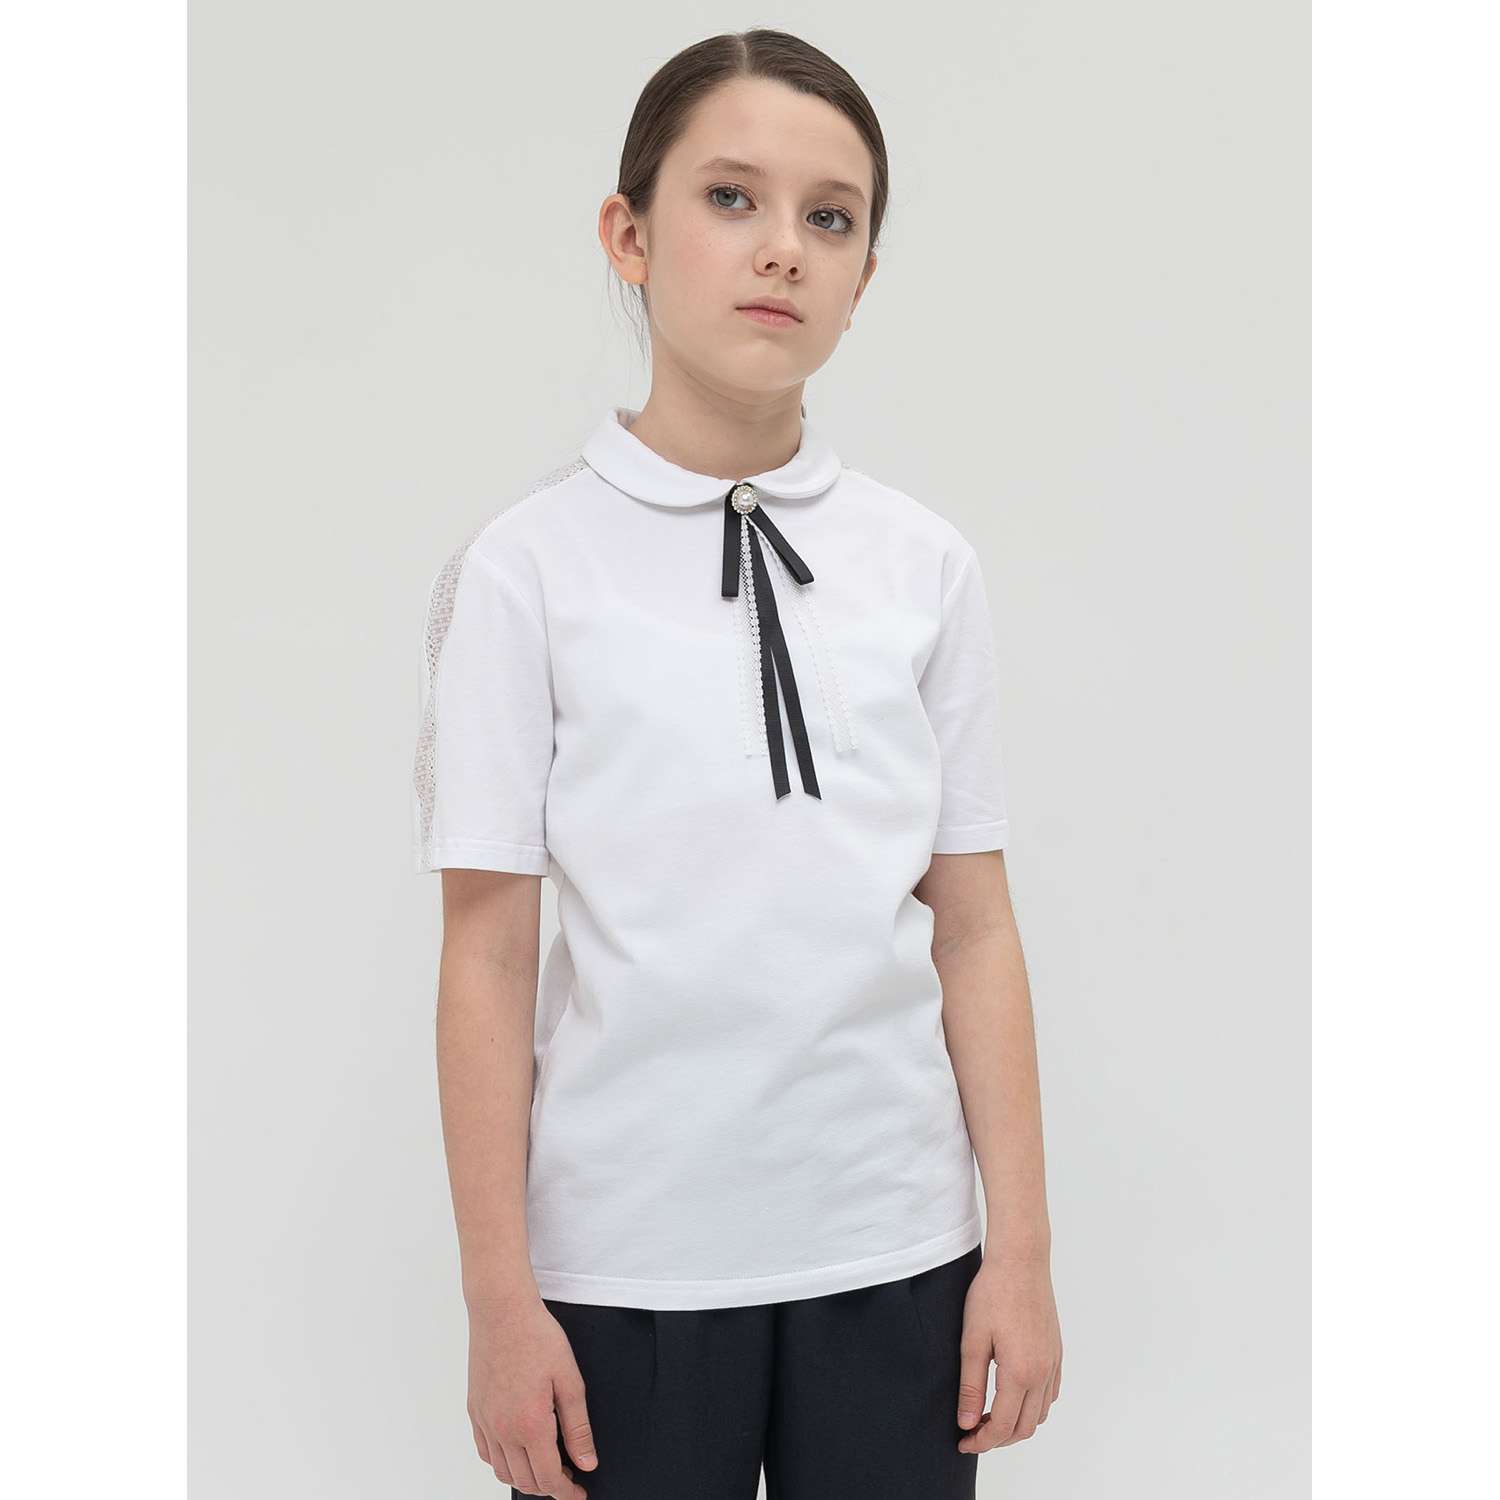 Блузка PELICAN GFT8142/Белый(2) - фото 1